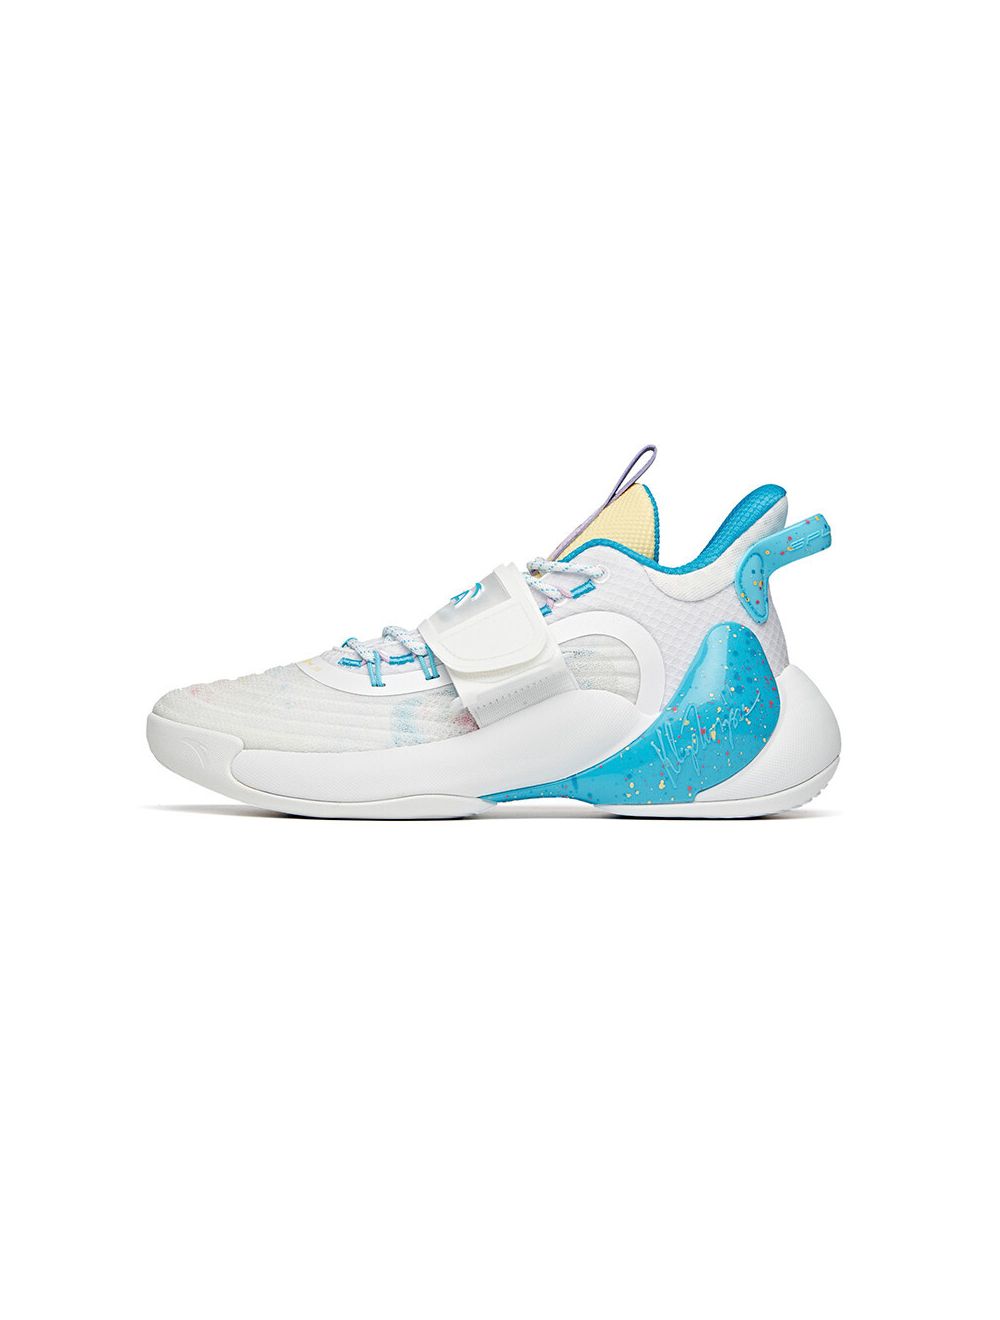 

Anta klay Thompson KT Men's Basketball Shoes Splash 3.0 2021 Sneakers - Iced Blueberry Tea 112121604S, As pic